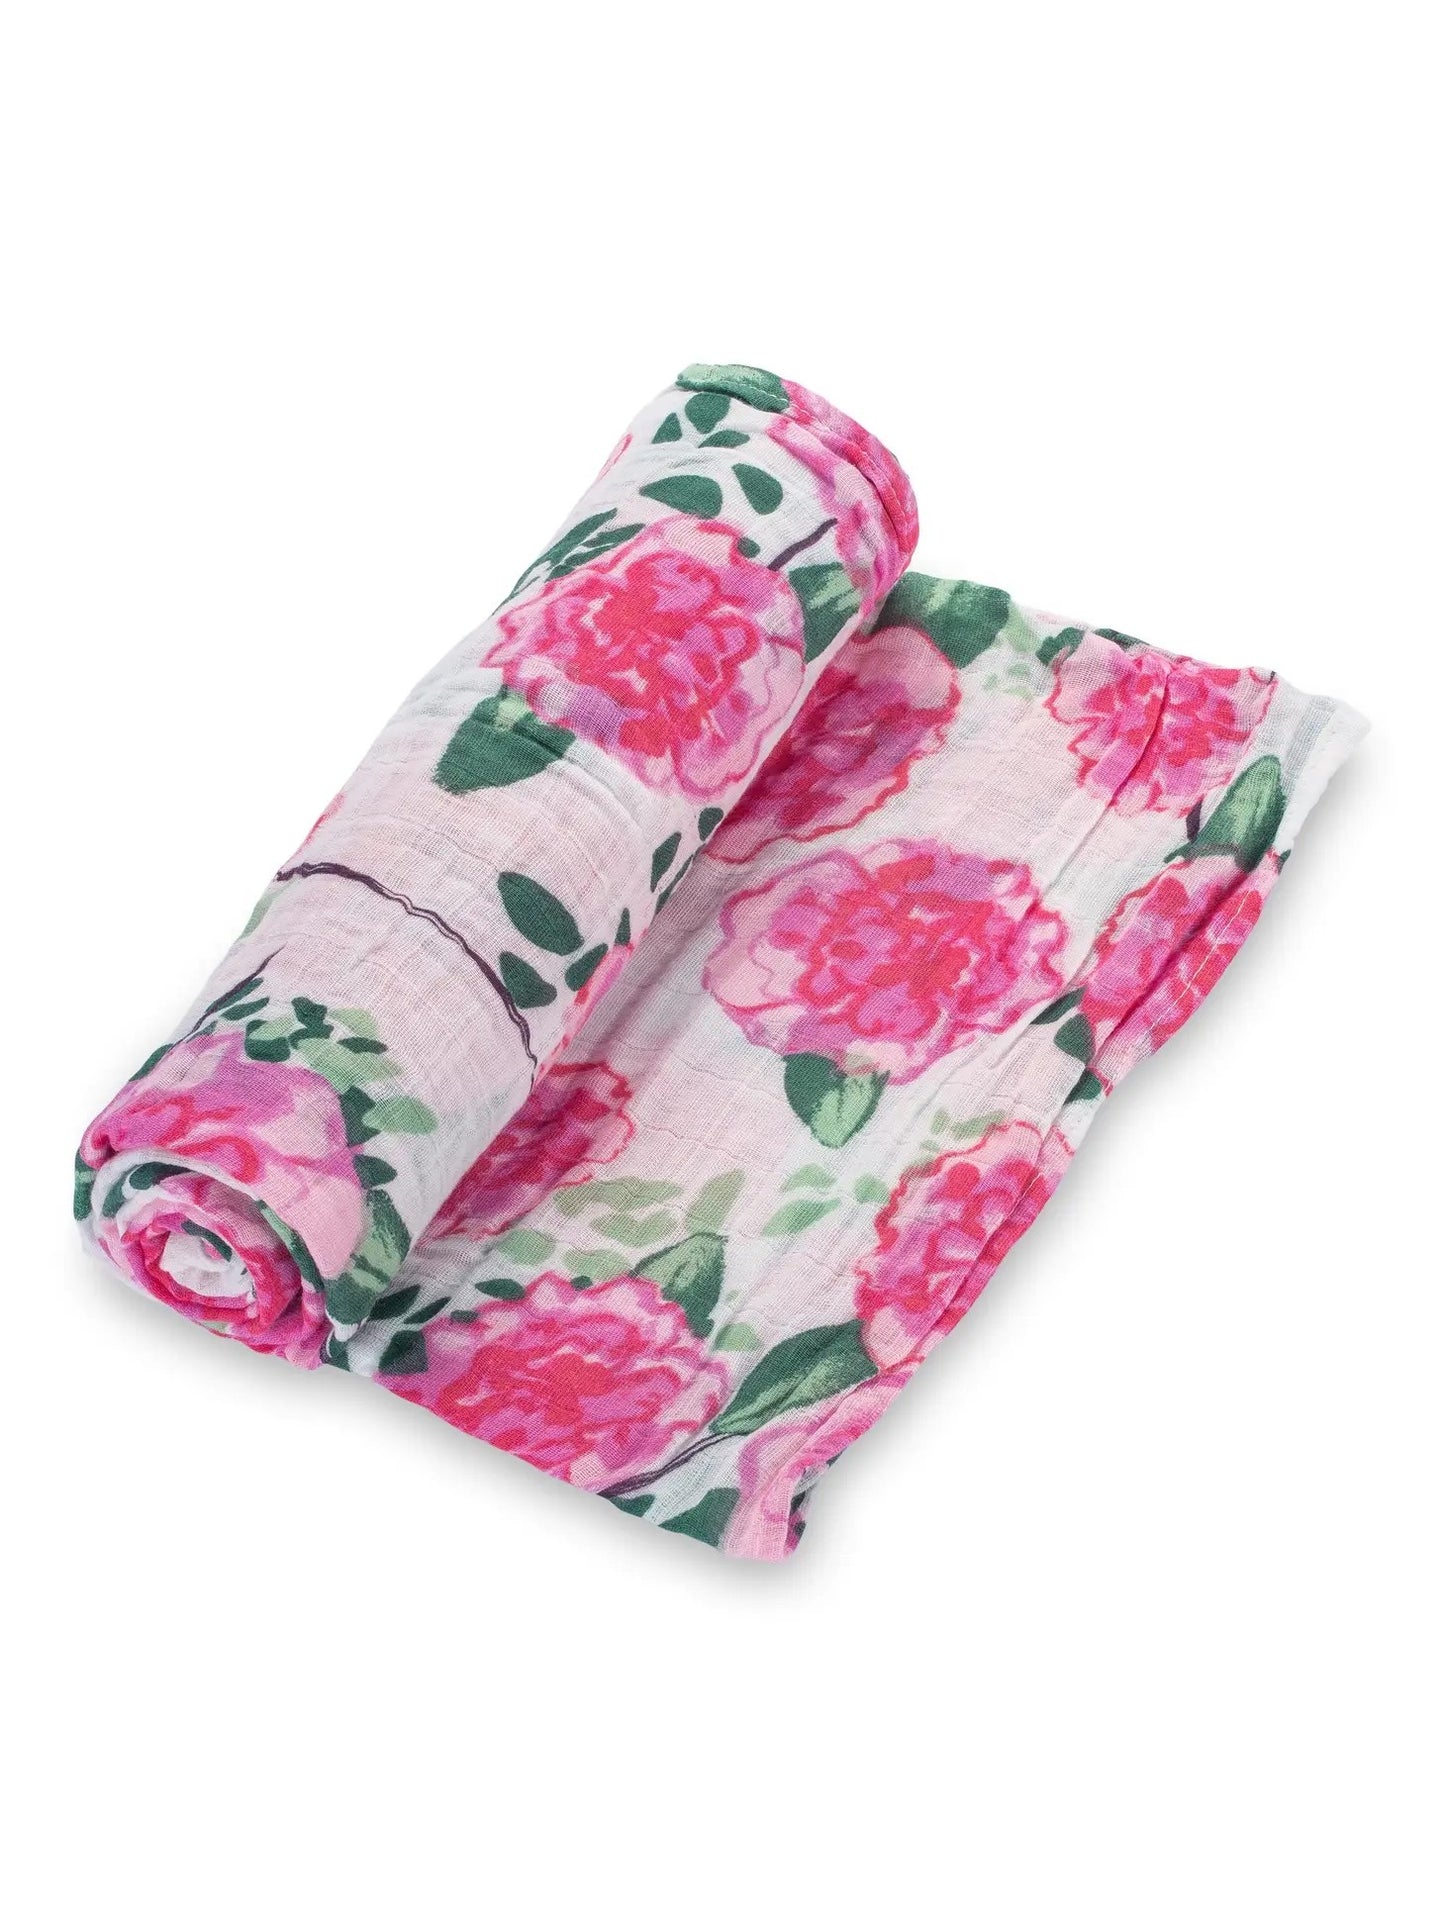 Muslin Swaddle Blanket - Blooms